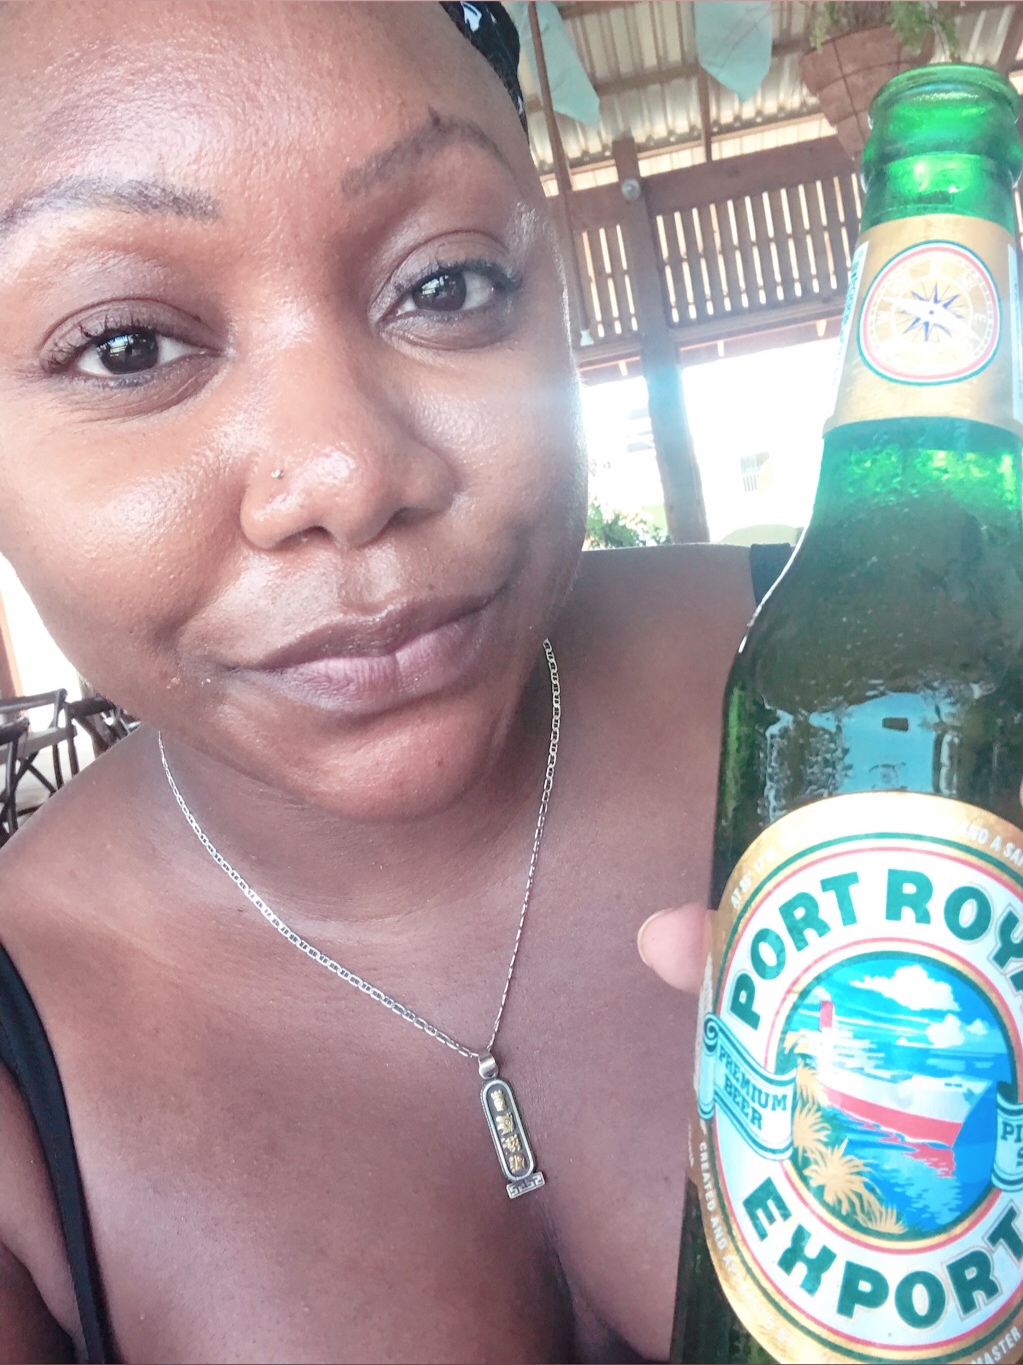 Port Royal Export Beer